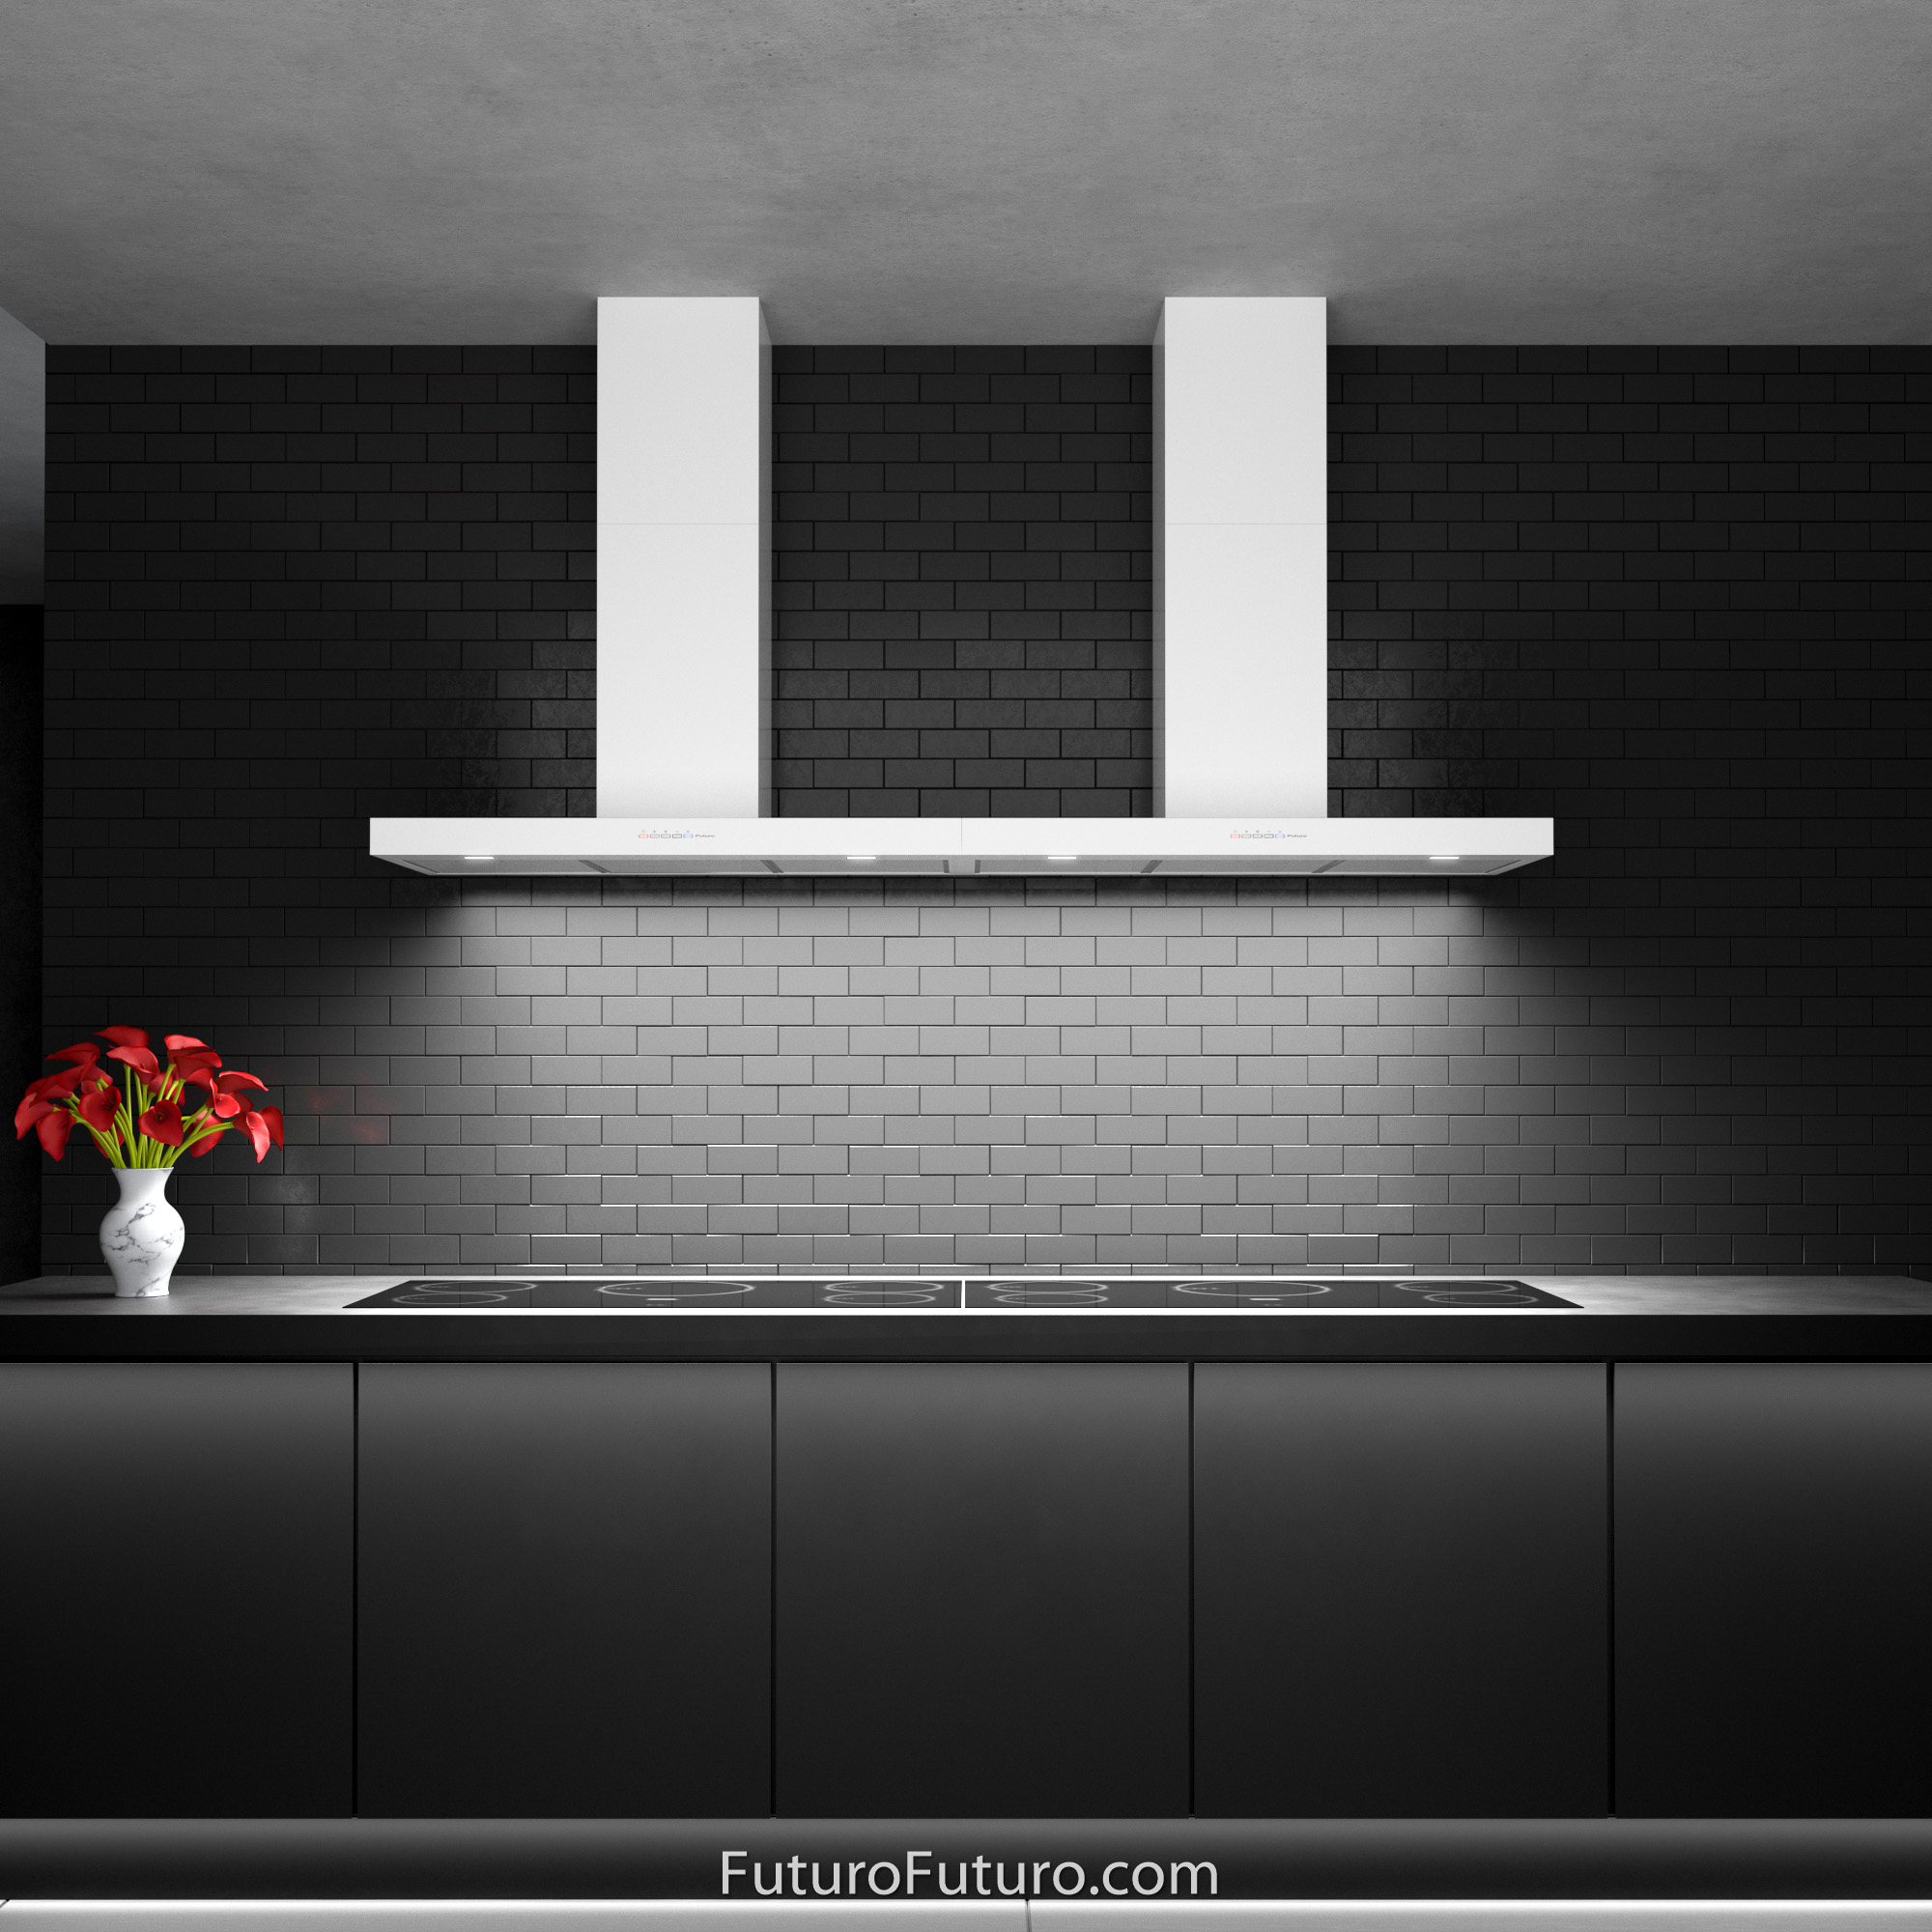 Black kitchen cabinets range hood | Wall mount range hood